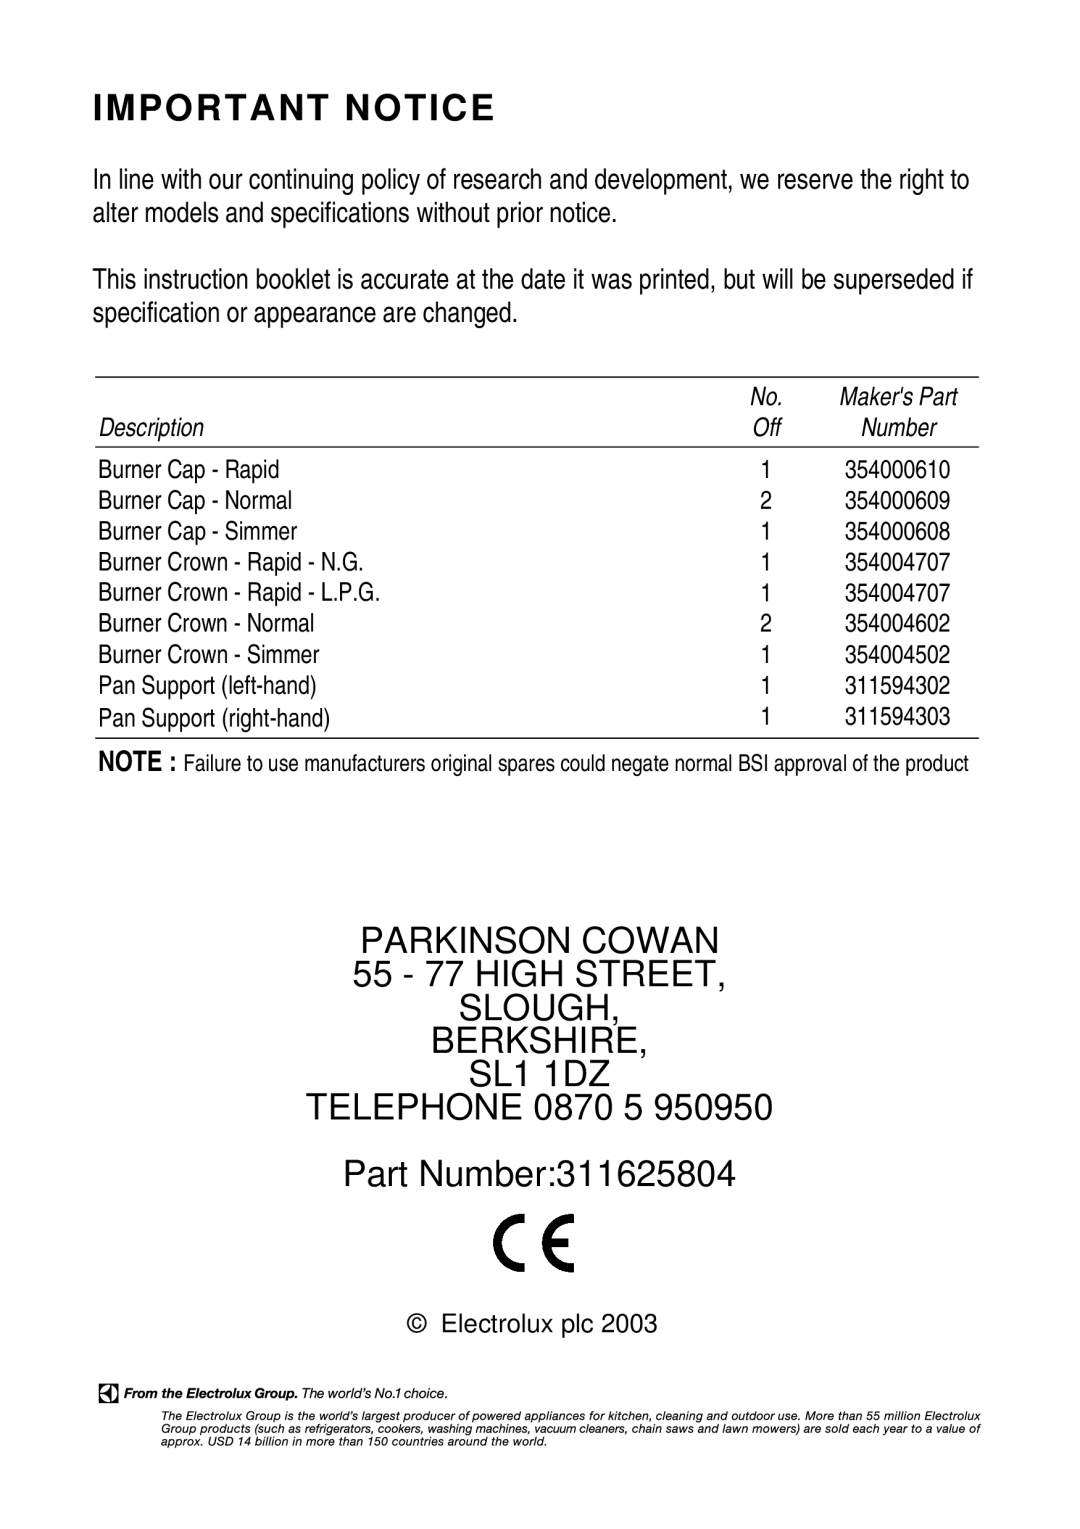 Electrolux SIG 556 installation instructions Important Notice, PARKINSON COWAN 55 - 77 HIGH STREET SLOUGH BERKSHIRE SL1 1DZ 